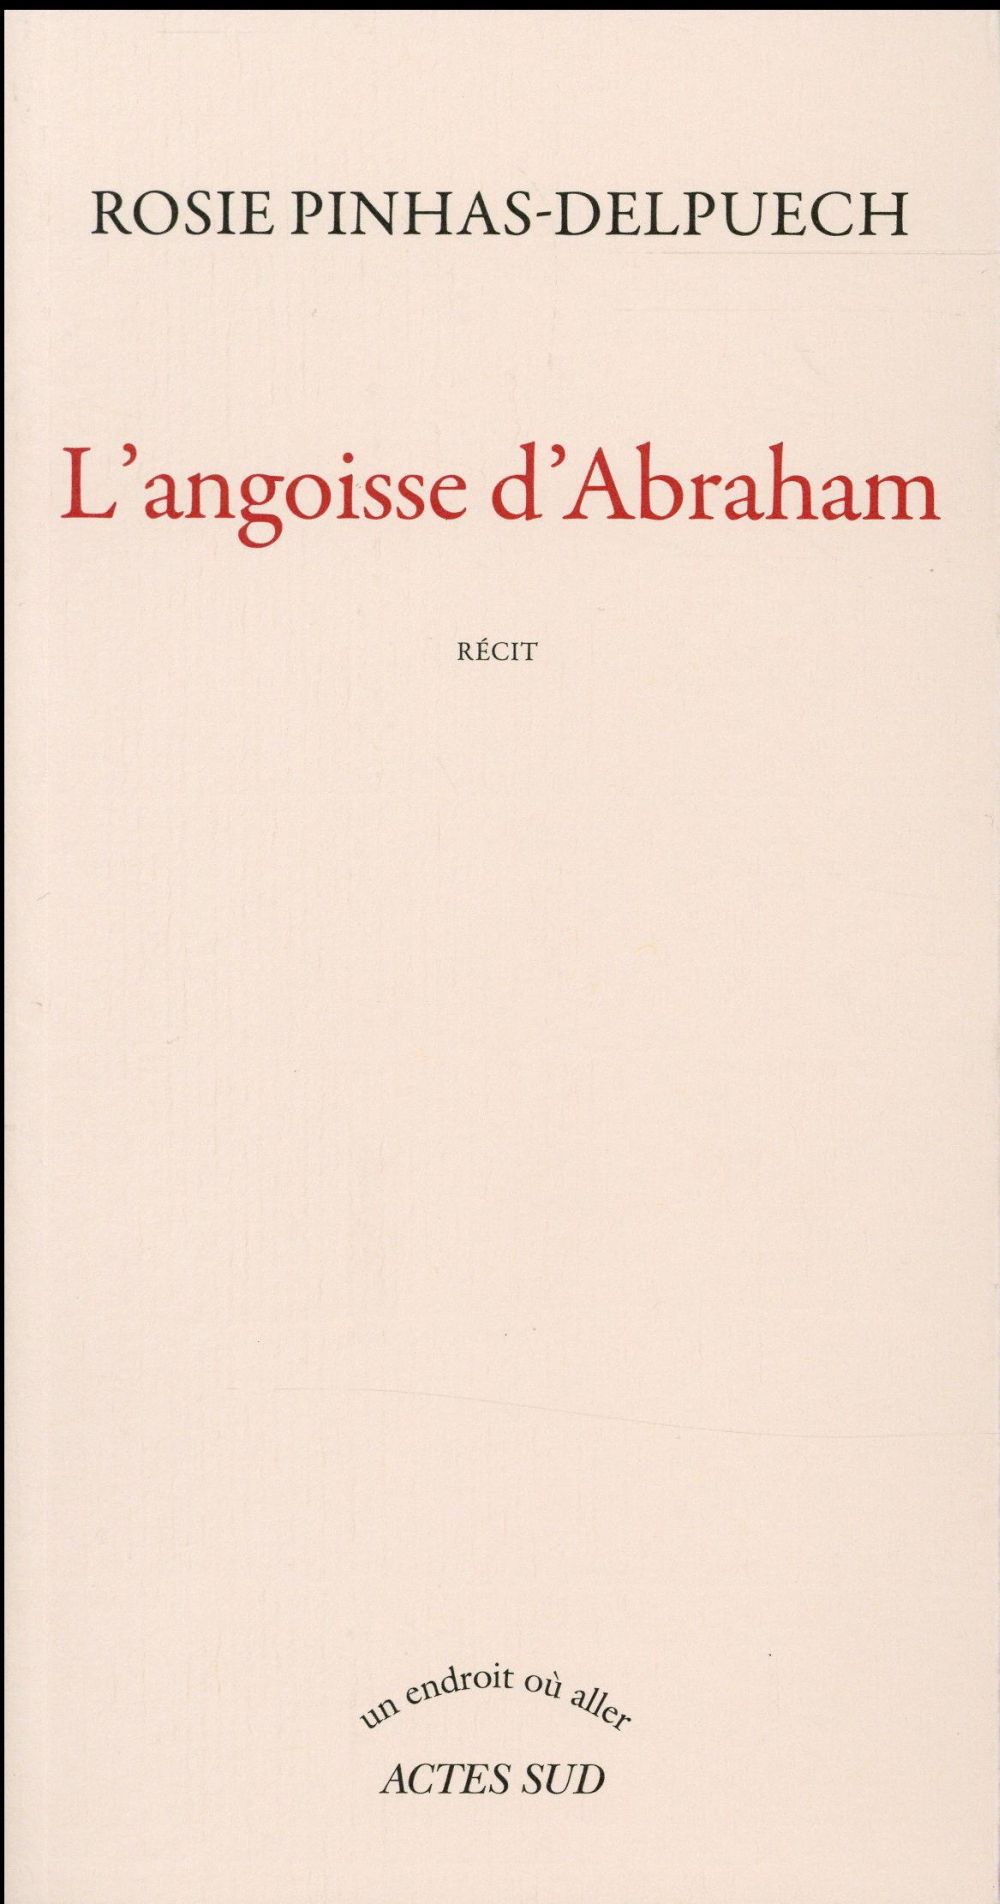 L'ANGOISSE D'ABRAHAM